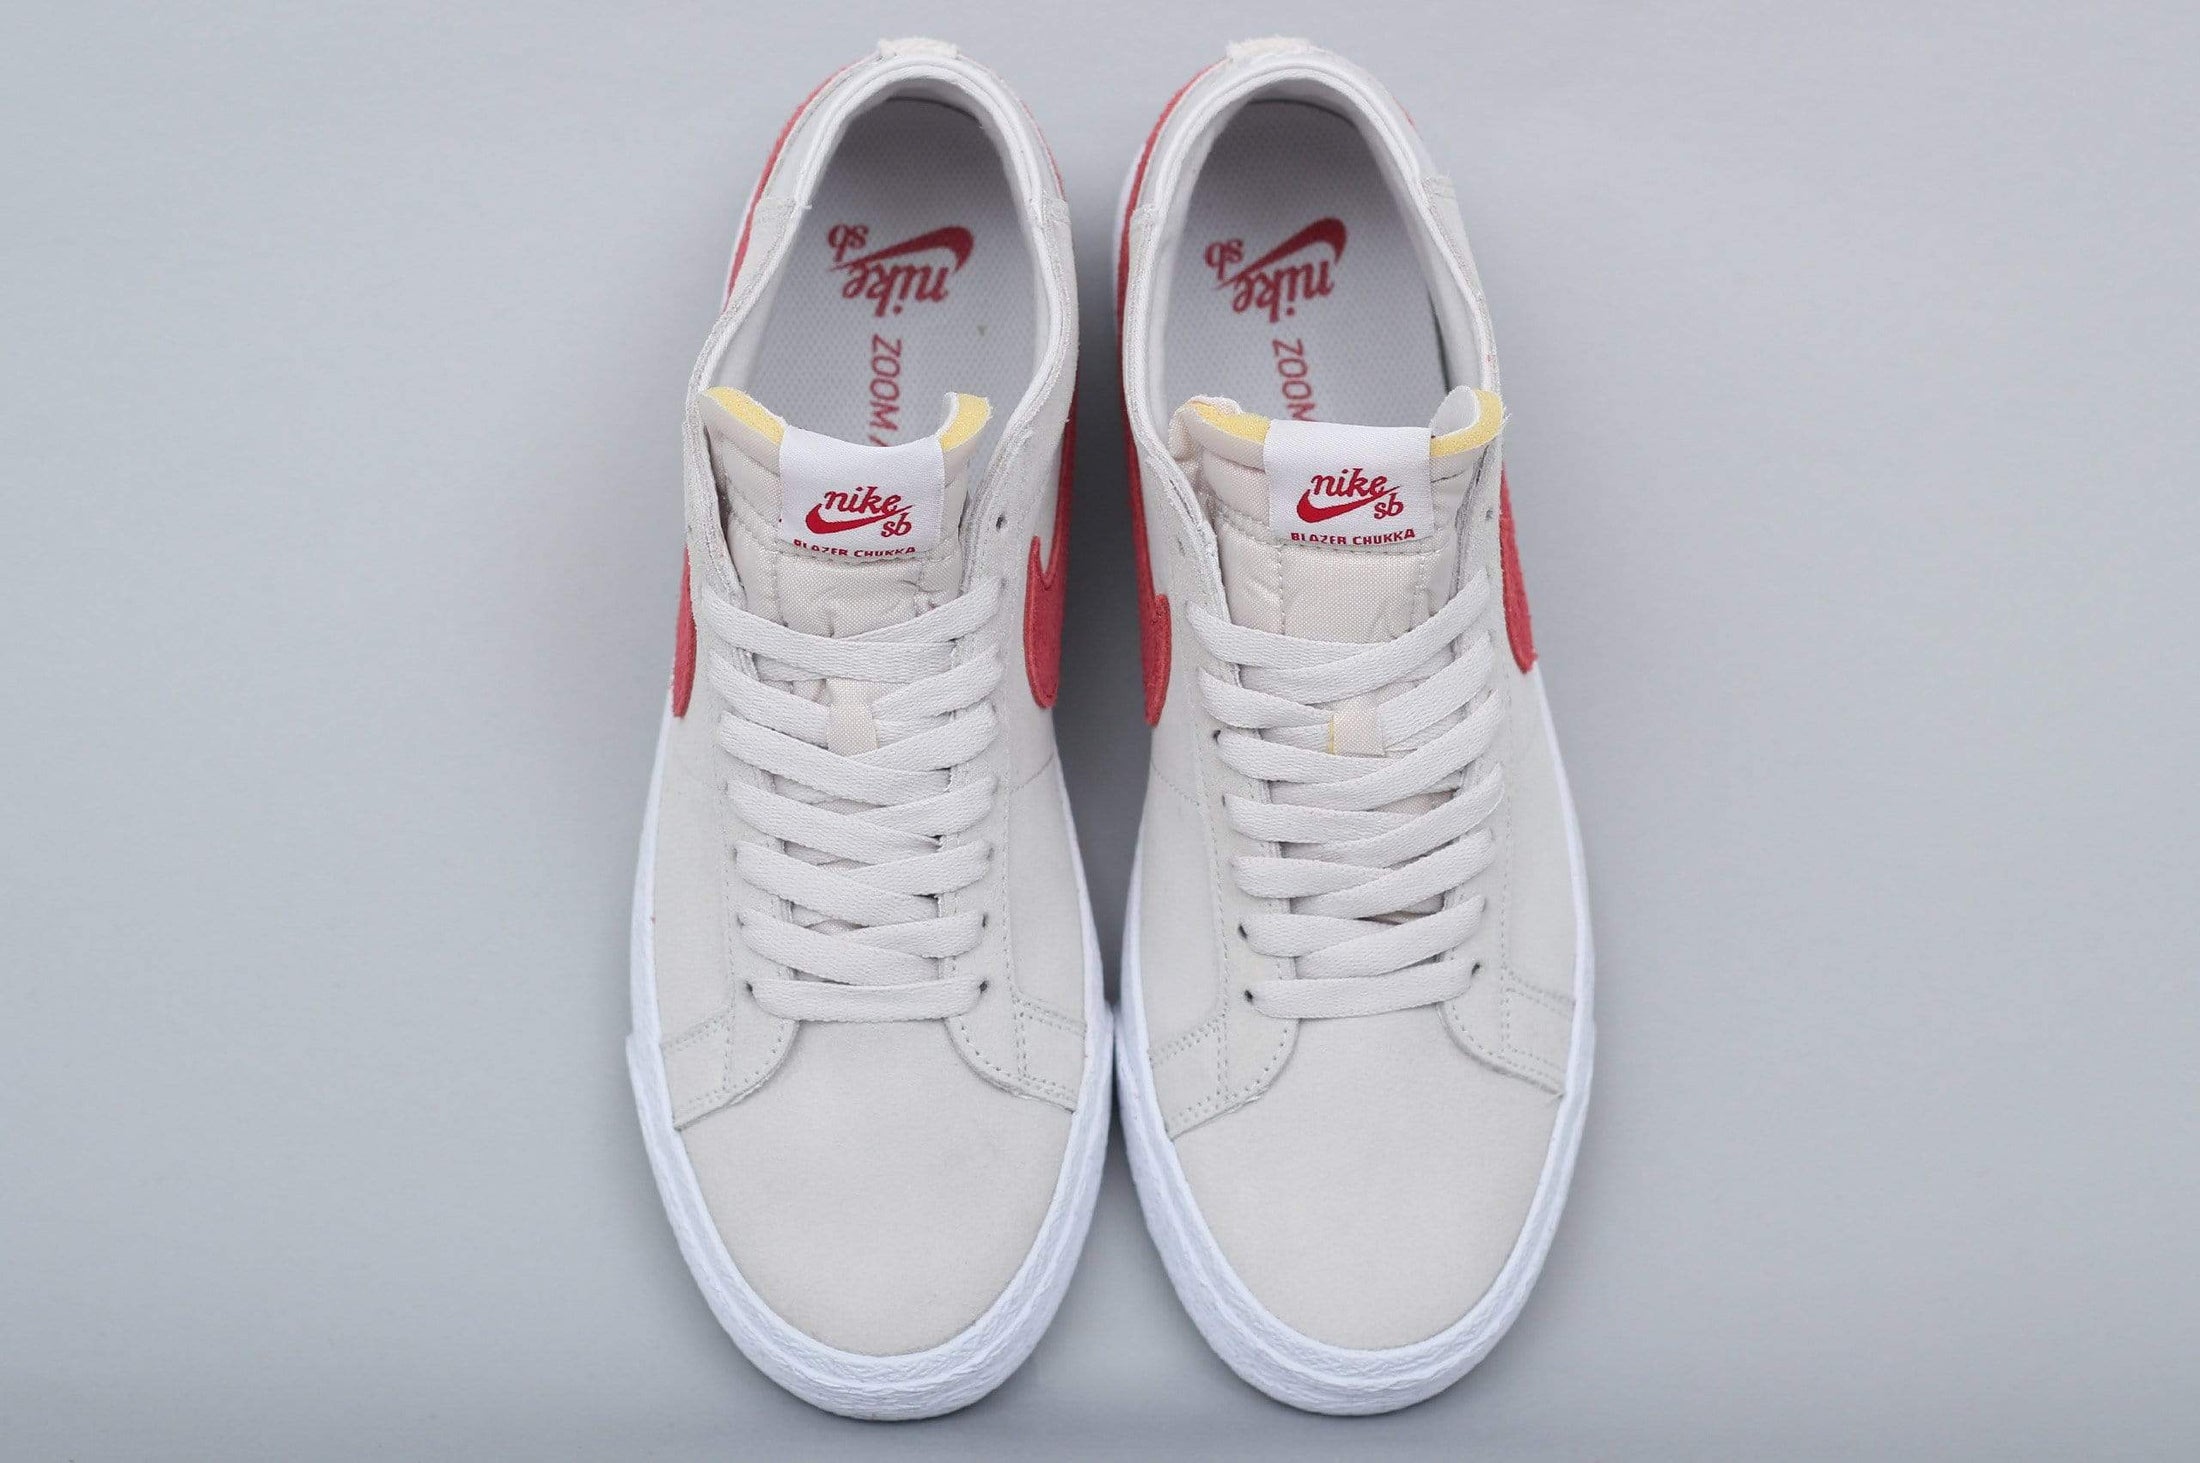 Nike SB Blazer Chukka Shoes Vast Grey / Team Crimson